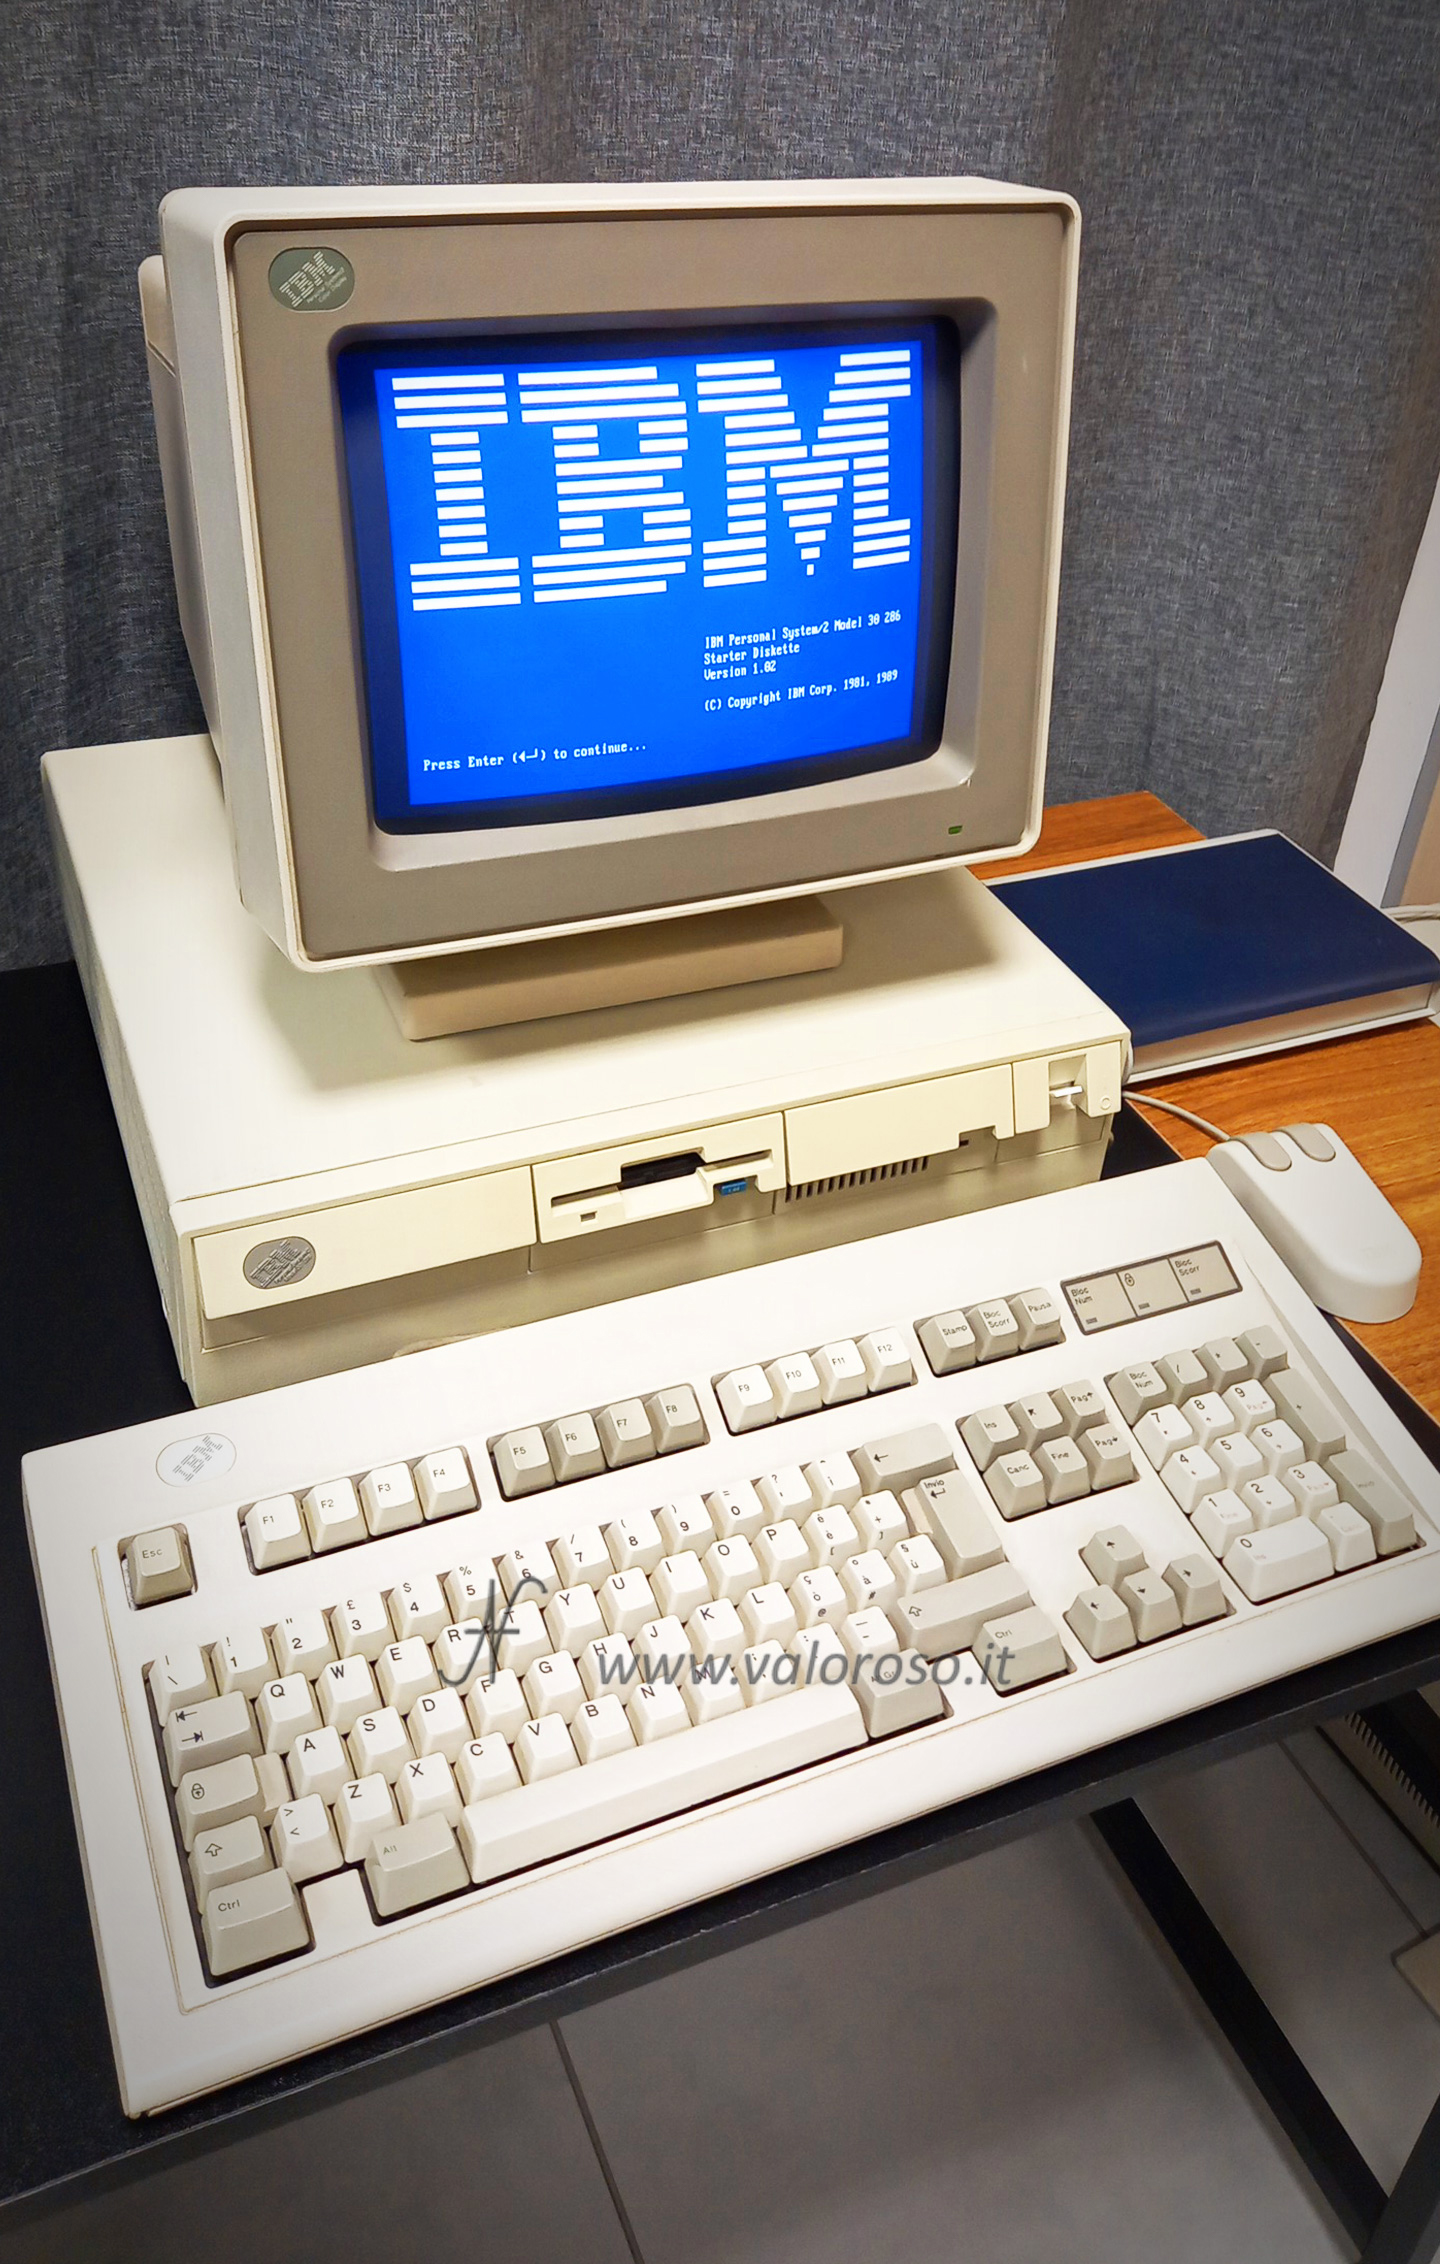 IBM PS2 model 30 286, Startup Disk, Intel 80286 286